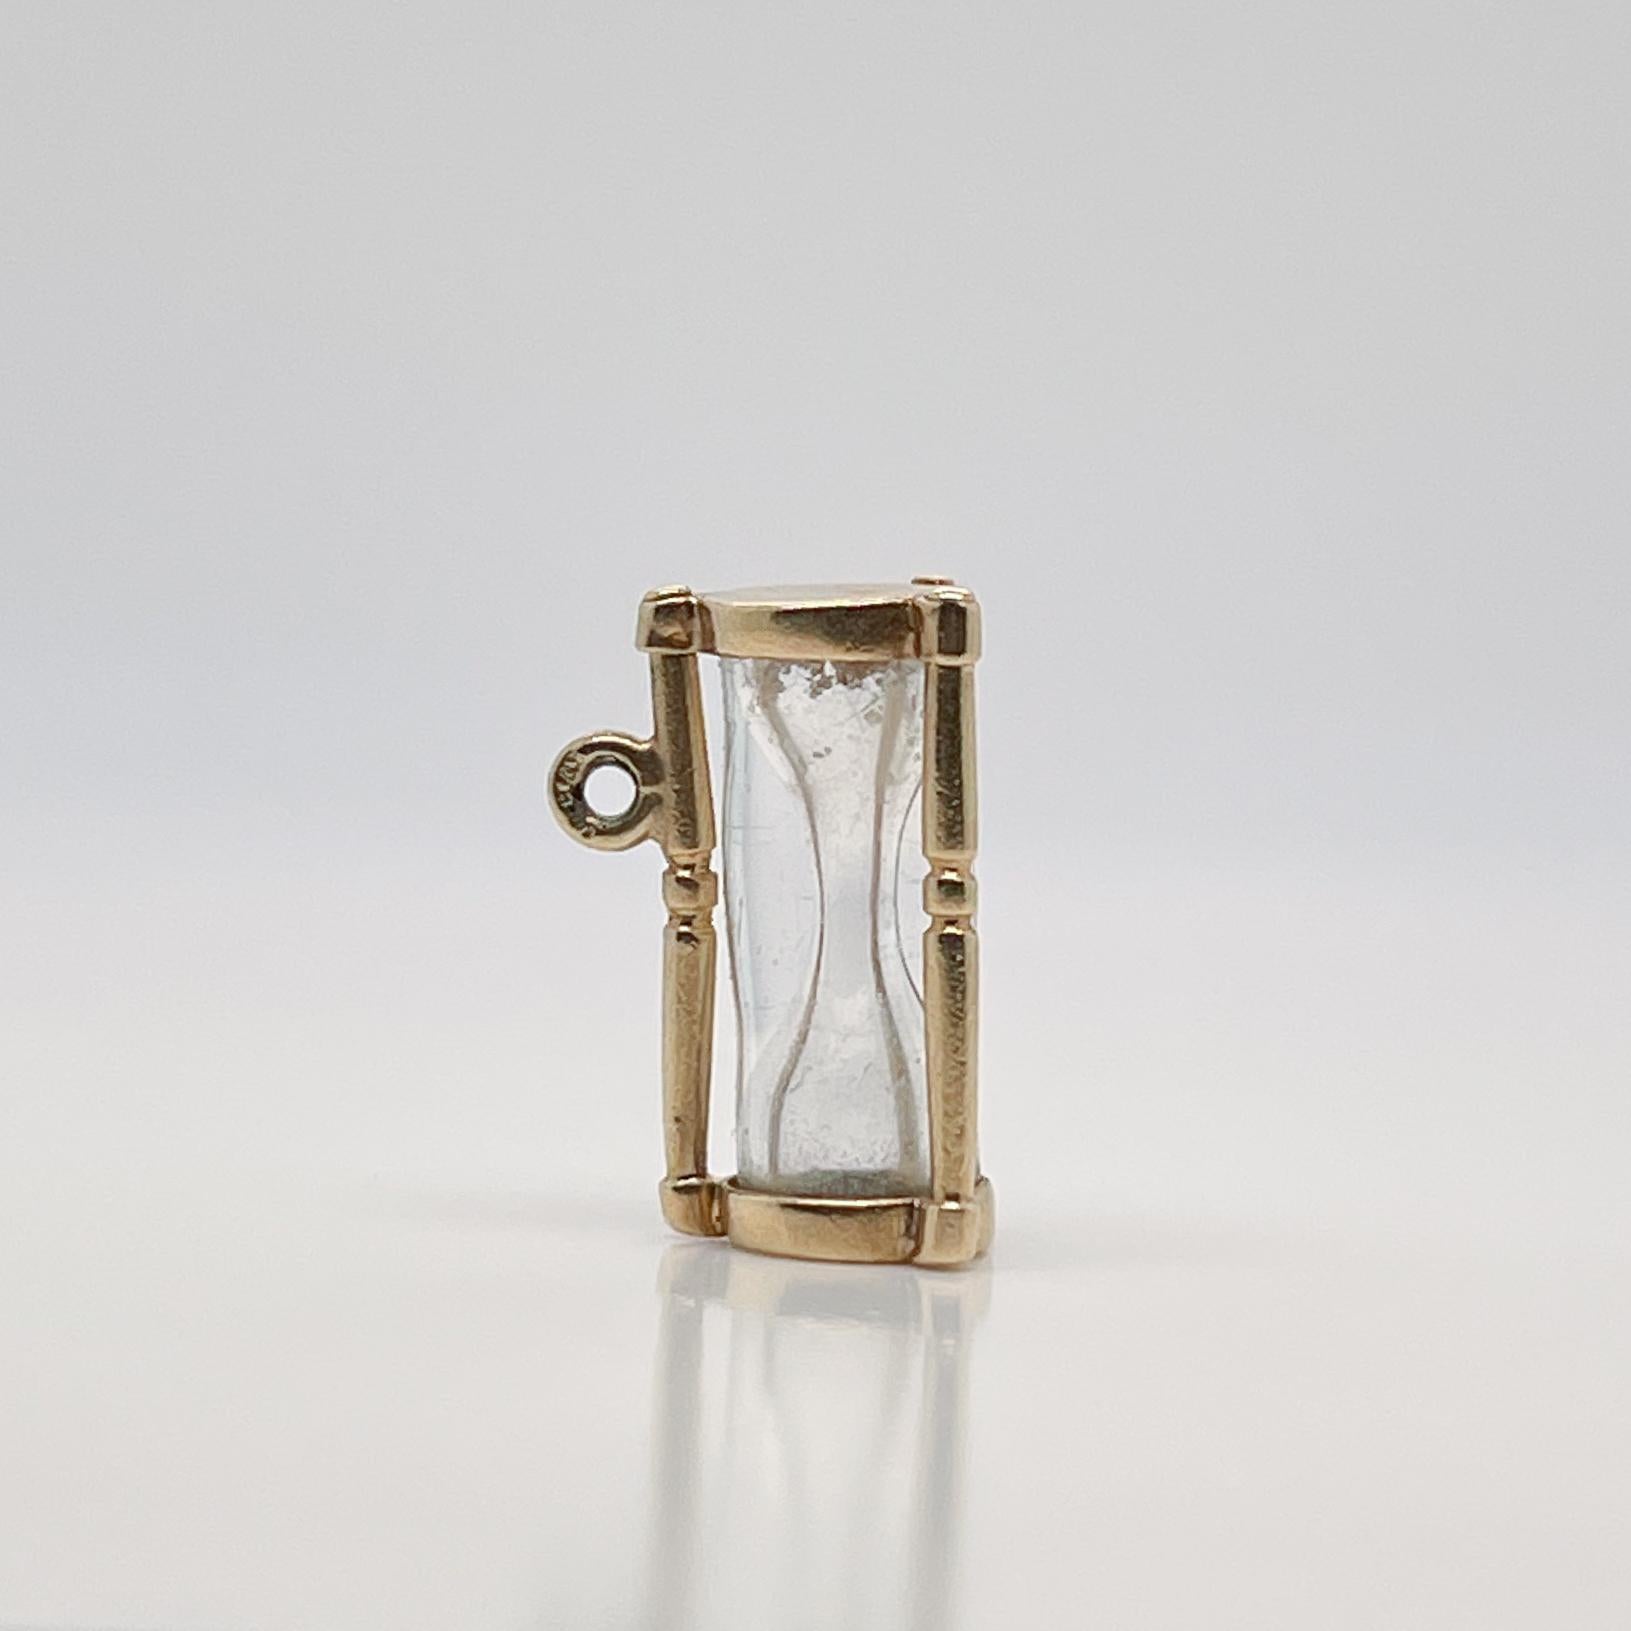 Modern Vintage 14K Gold Charm of an Hour Glass for a Bracelet